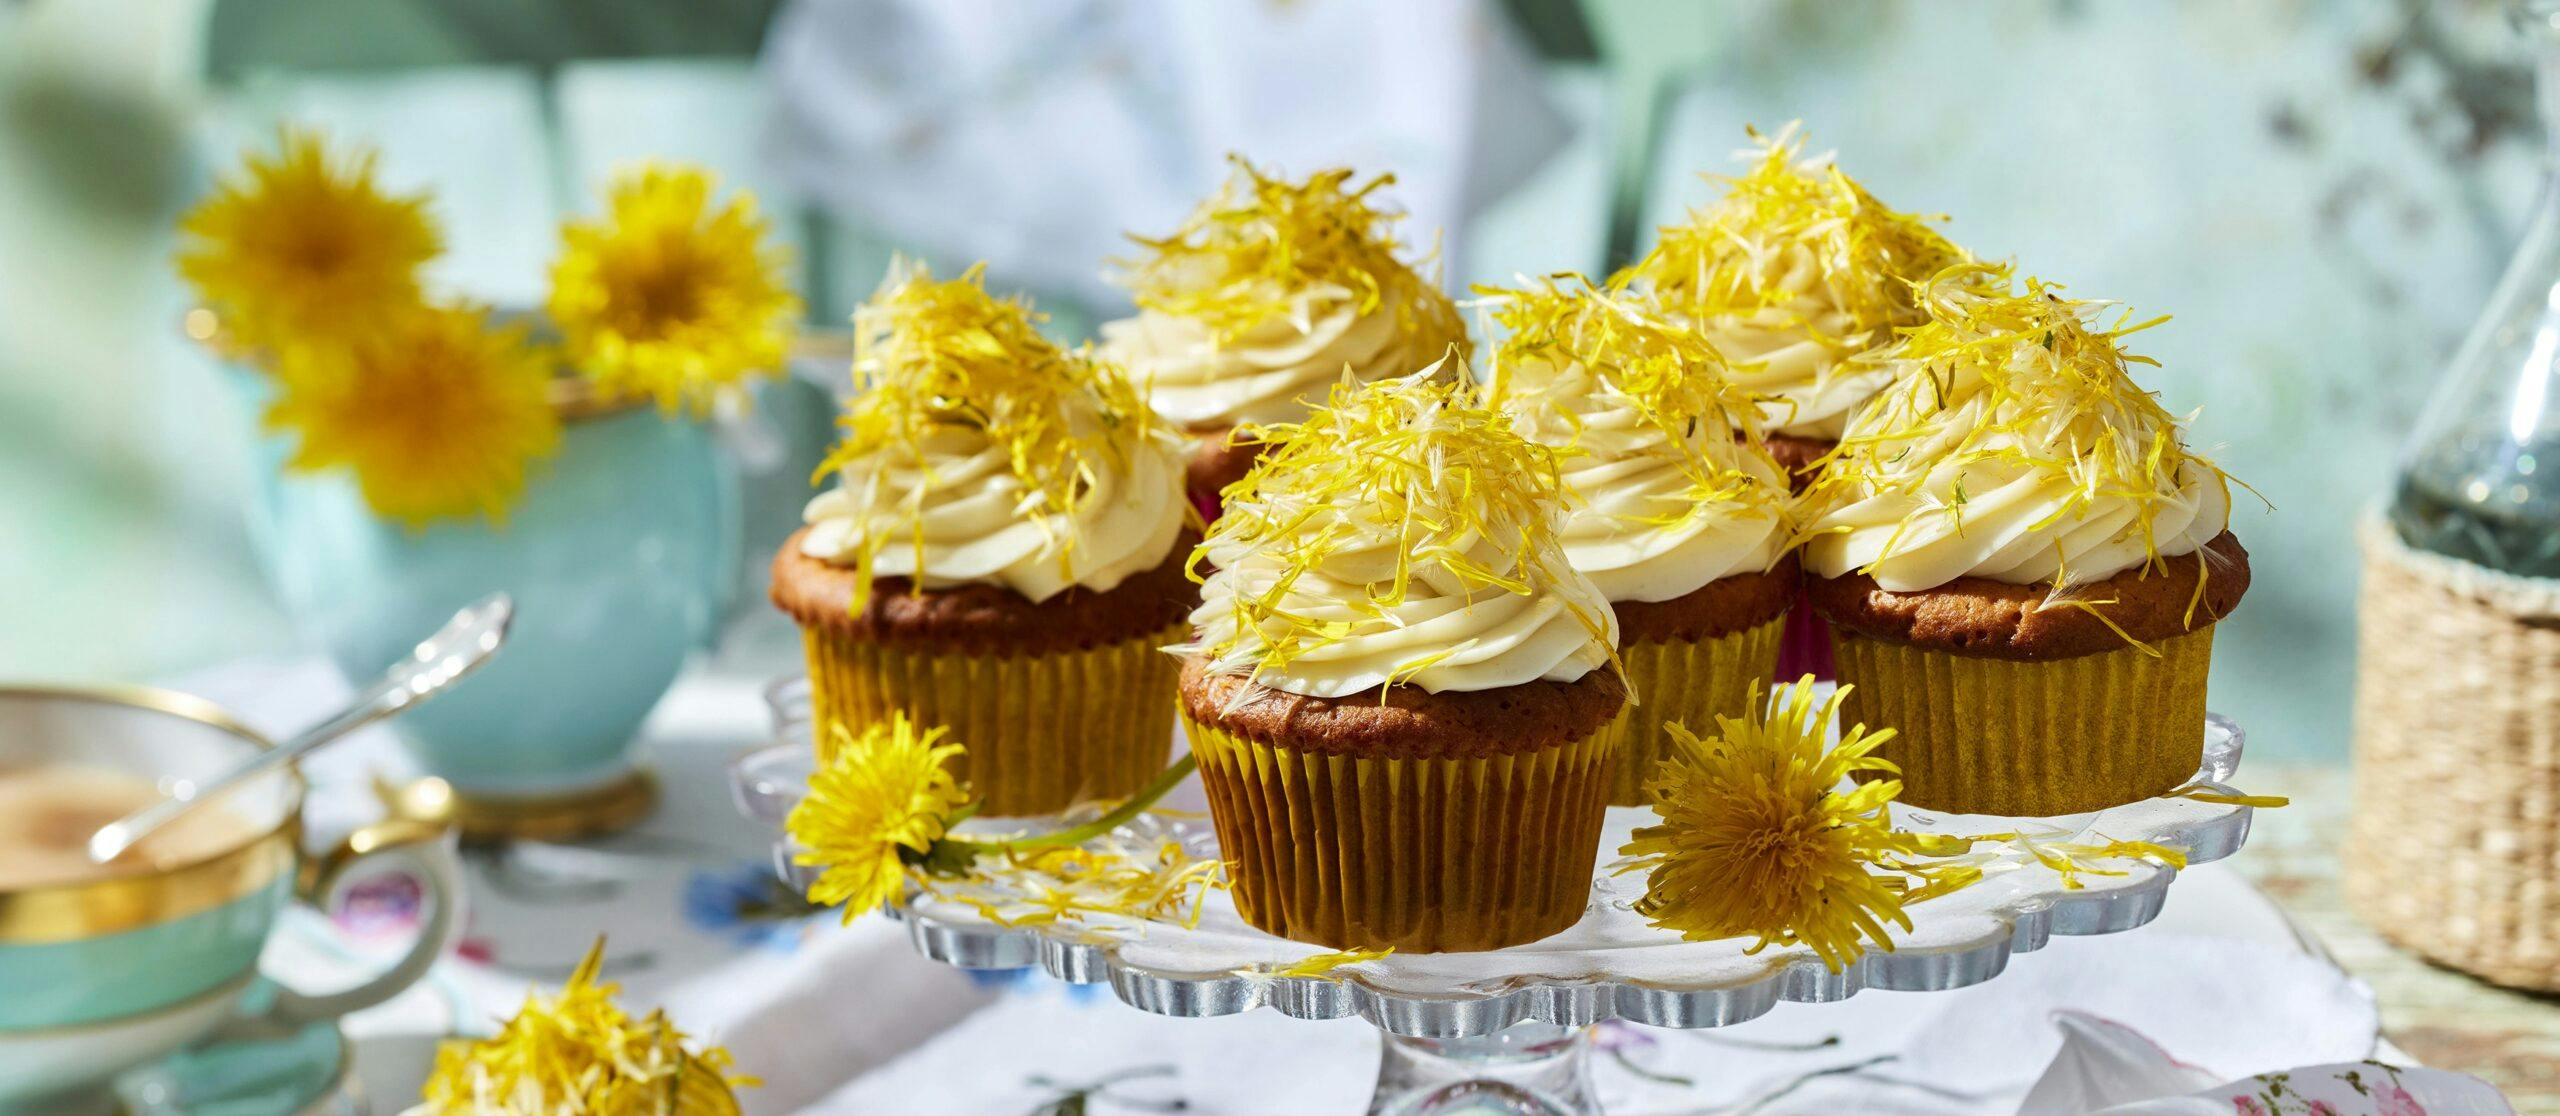 Roses & dandelions cake | Order Online | Oh My Cake!